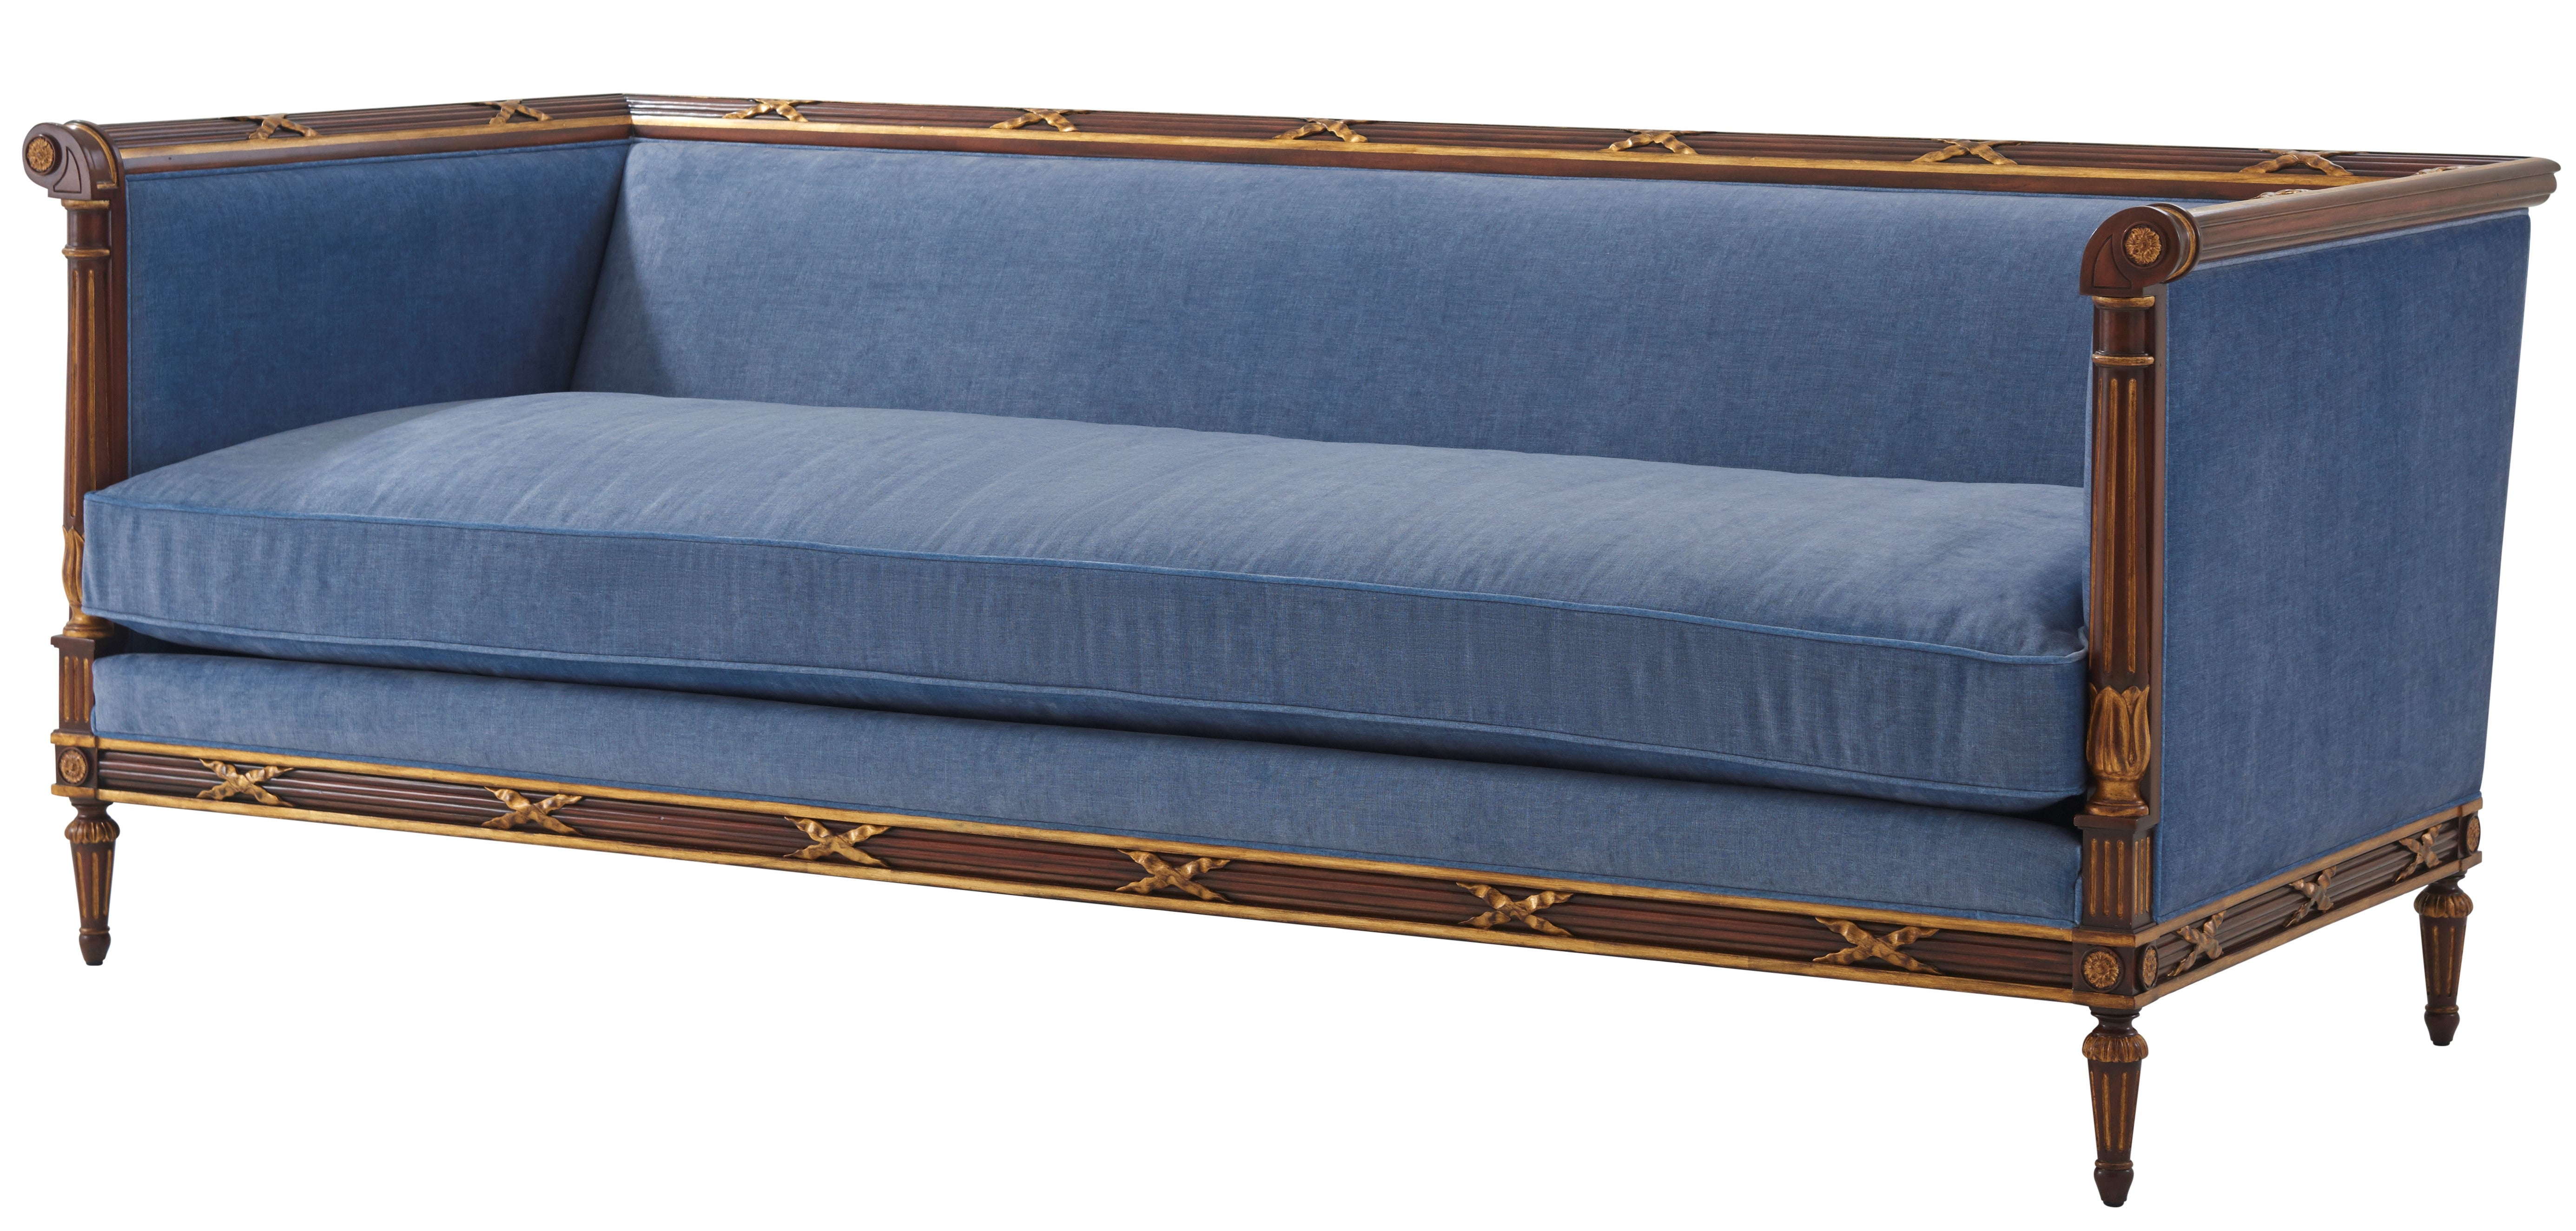 George III inspired sofa inspired sofa in gorgeous blue fabric